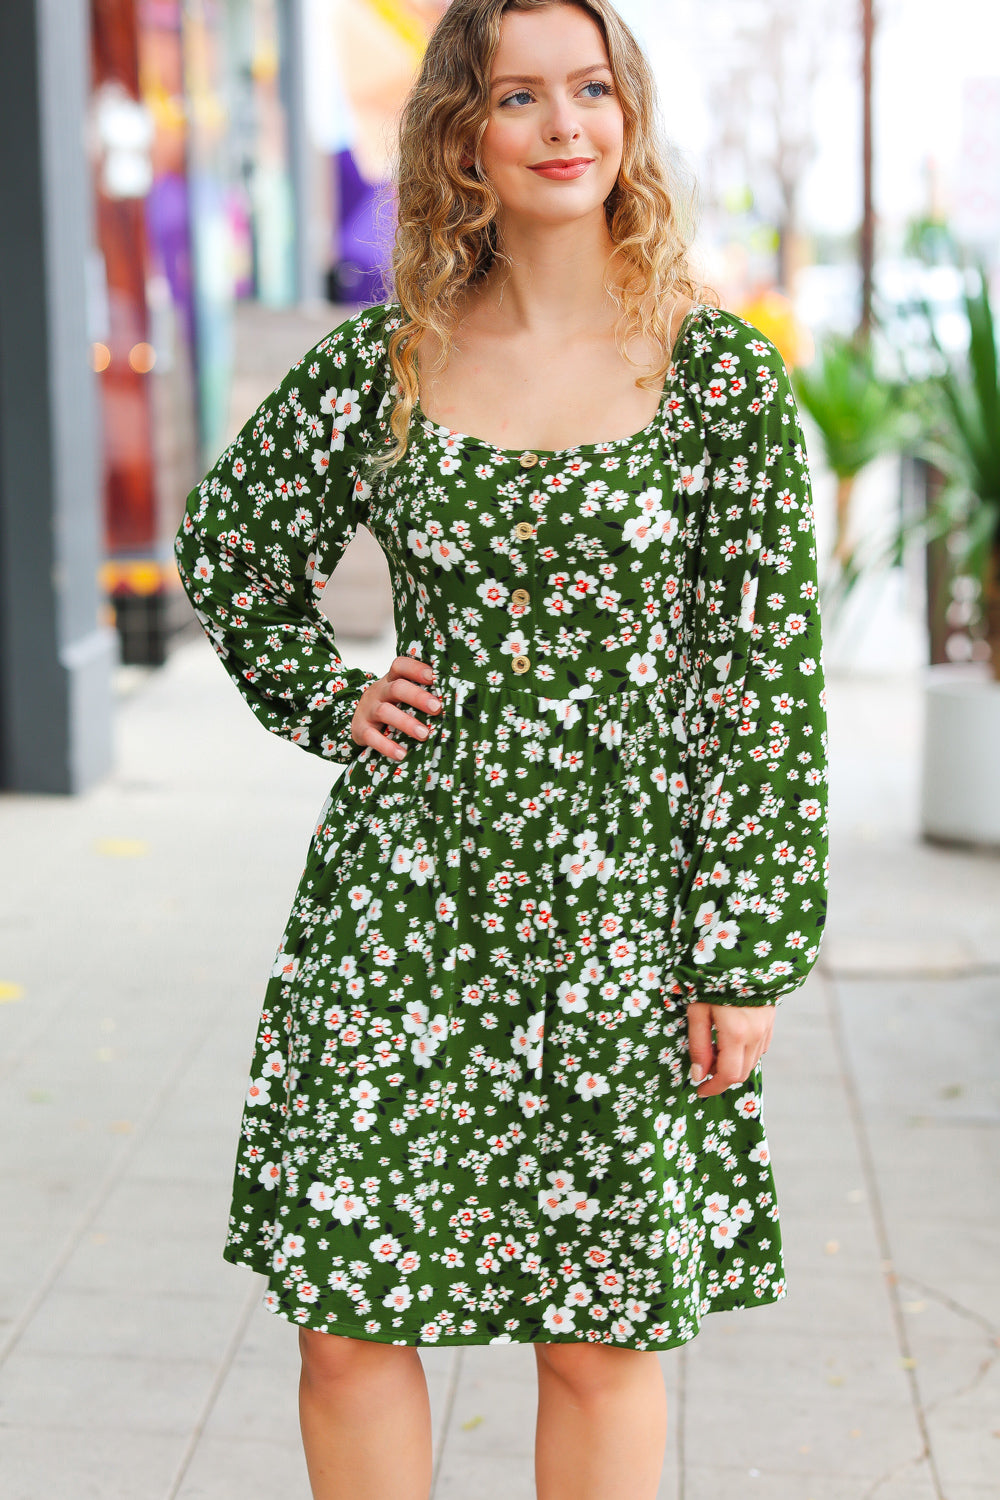 Positive Perceptions Olive Ditsy Floral Square Neck Dress Haptics